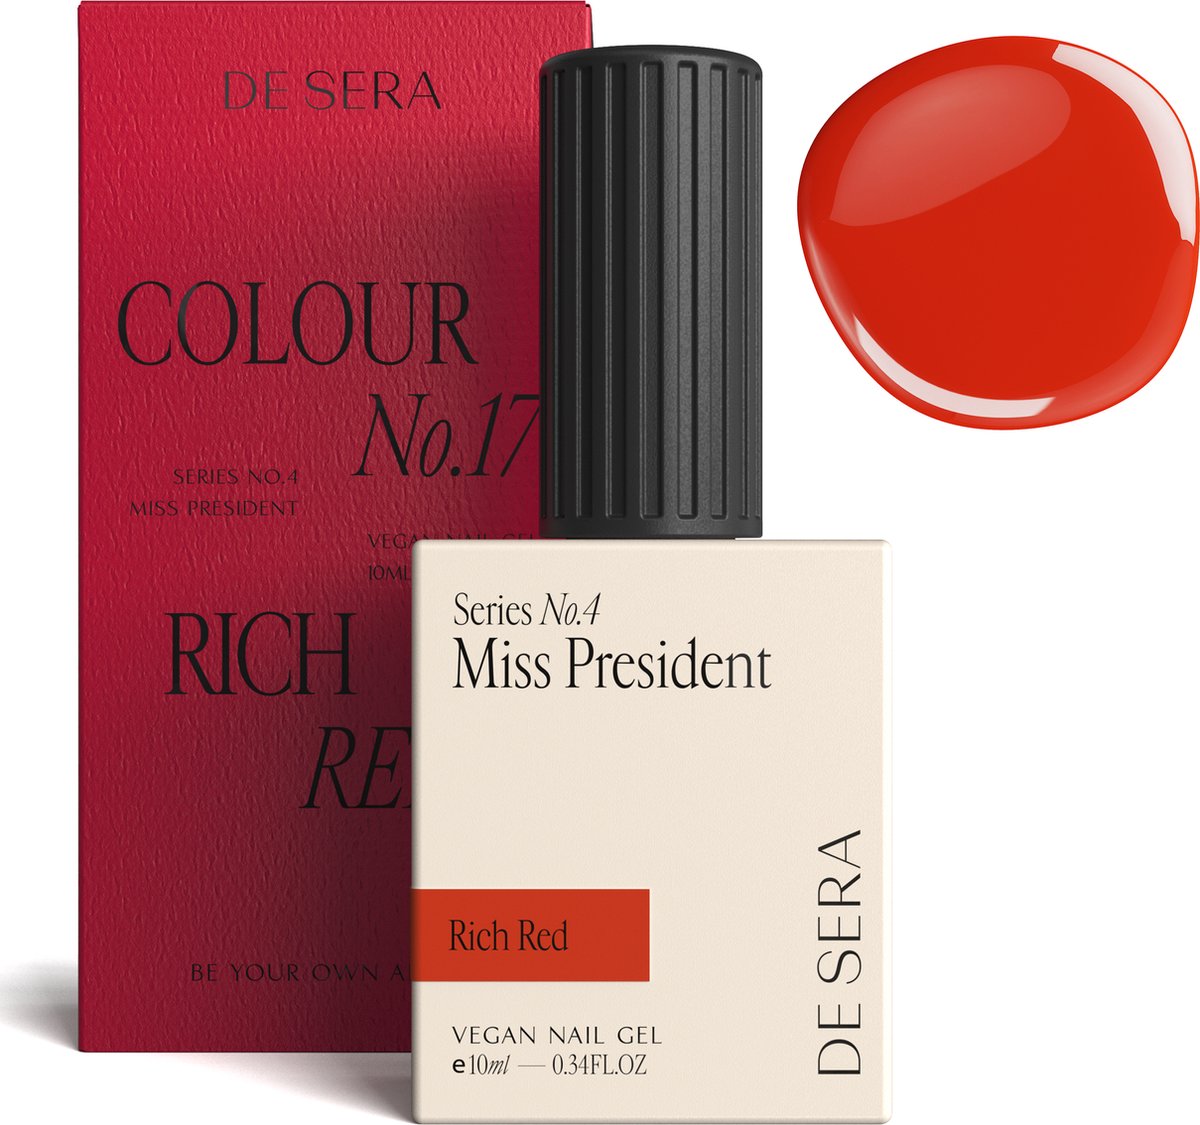 De Sera Gellak - Rode Gel Nagellak - Rood - 10ML - Colour No. 17 Rich Red